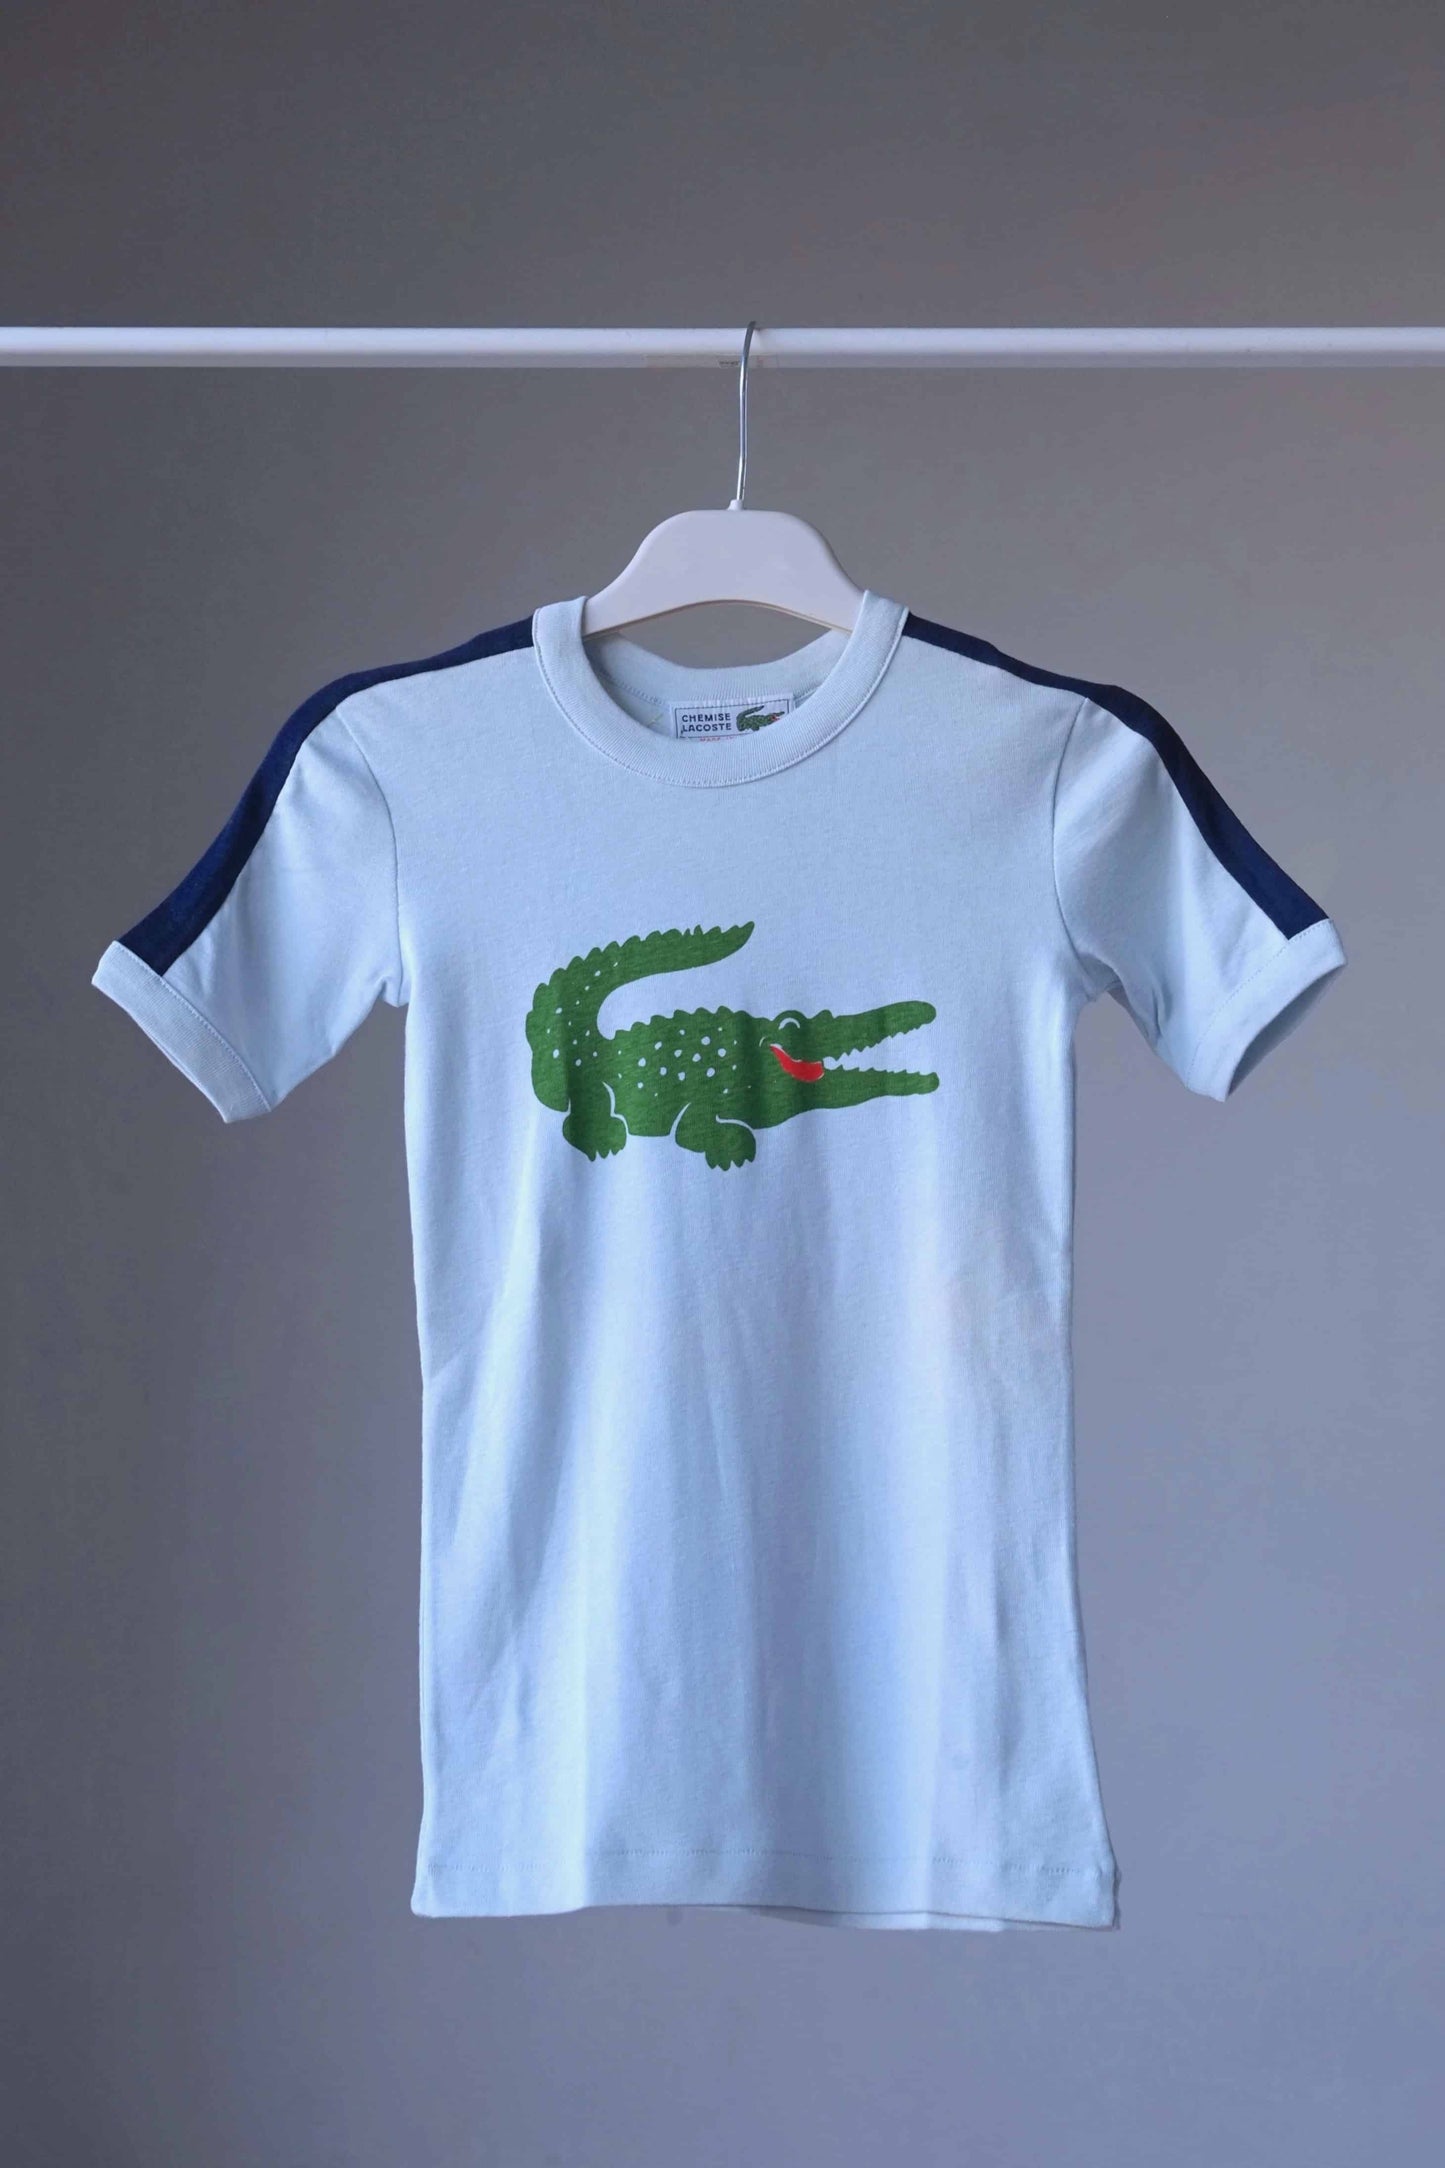 LACOSTE Crocodile Logo T-shirt in light blue on hanger